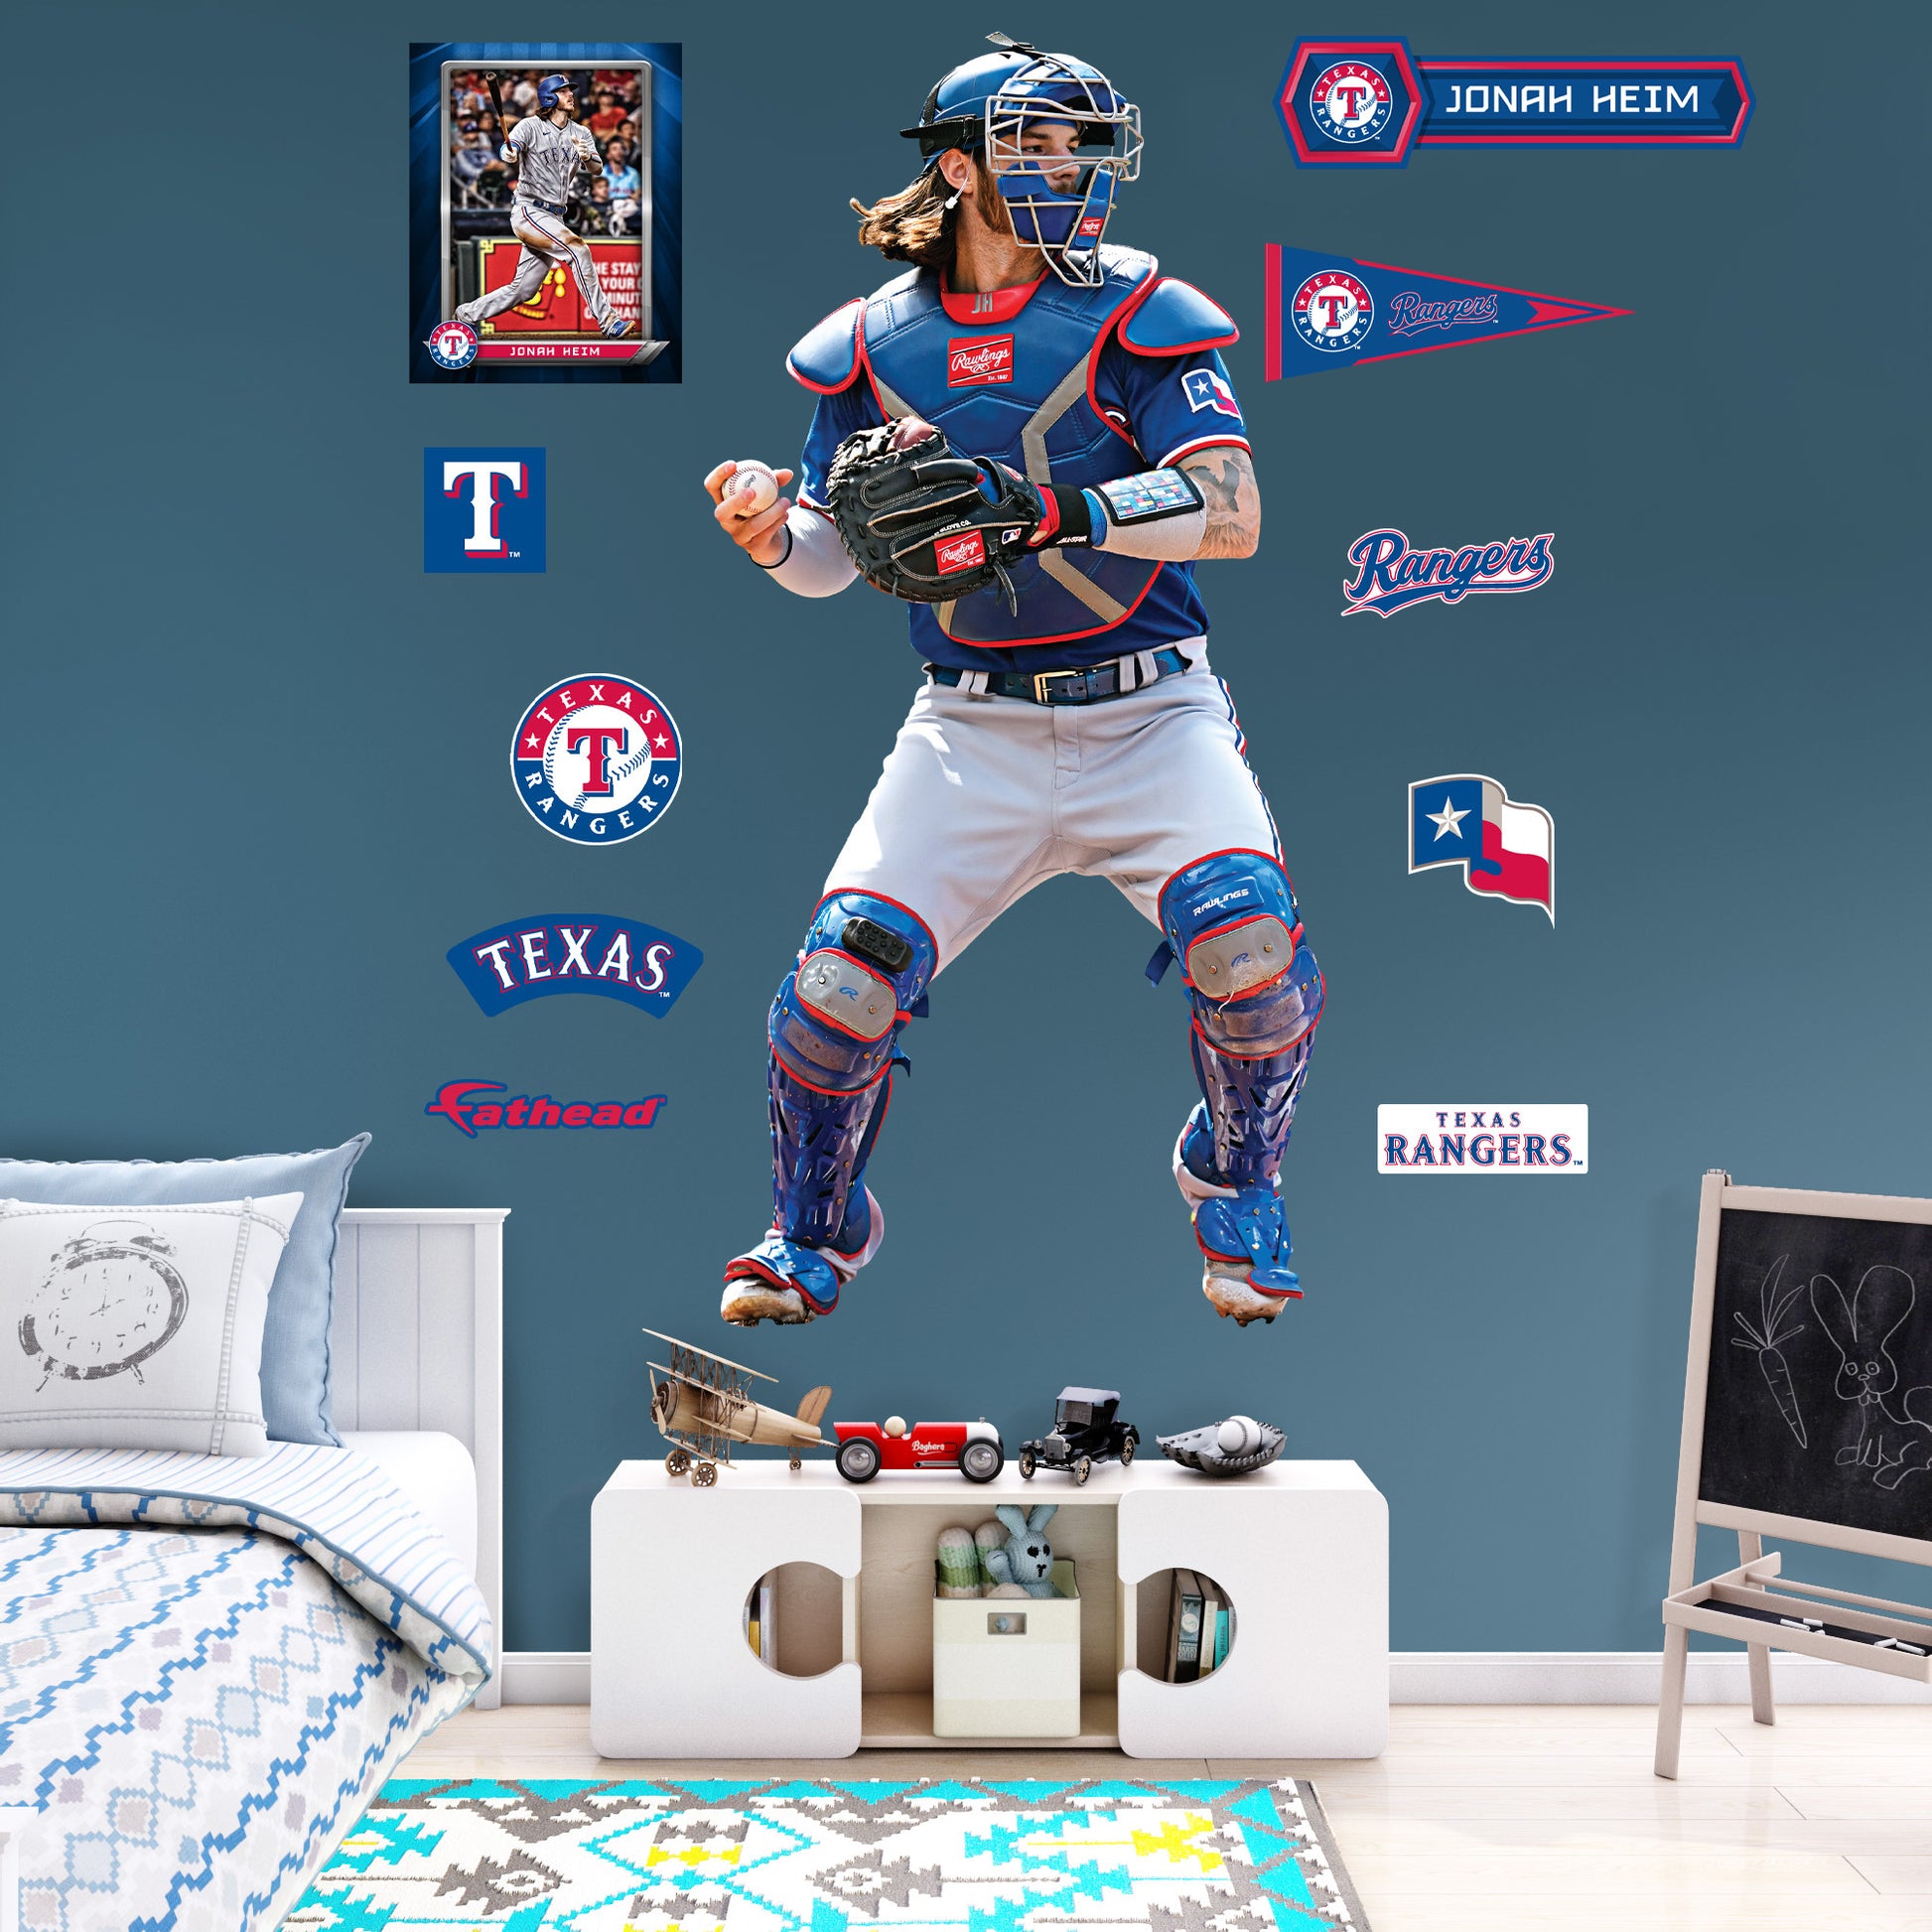 Texas Rangers MLB Mens Floral Button Up Shirt